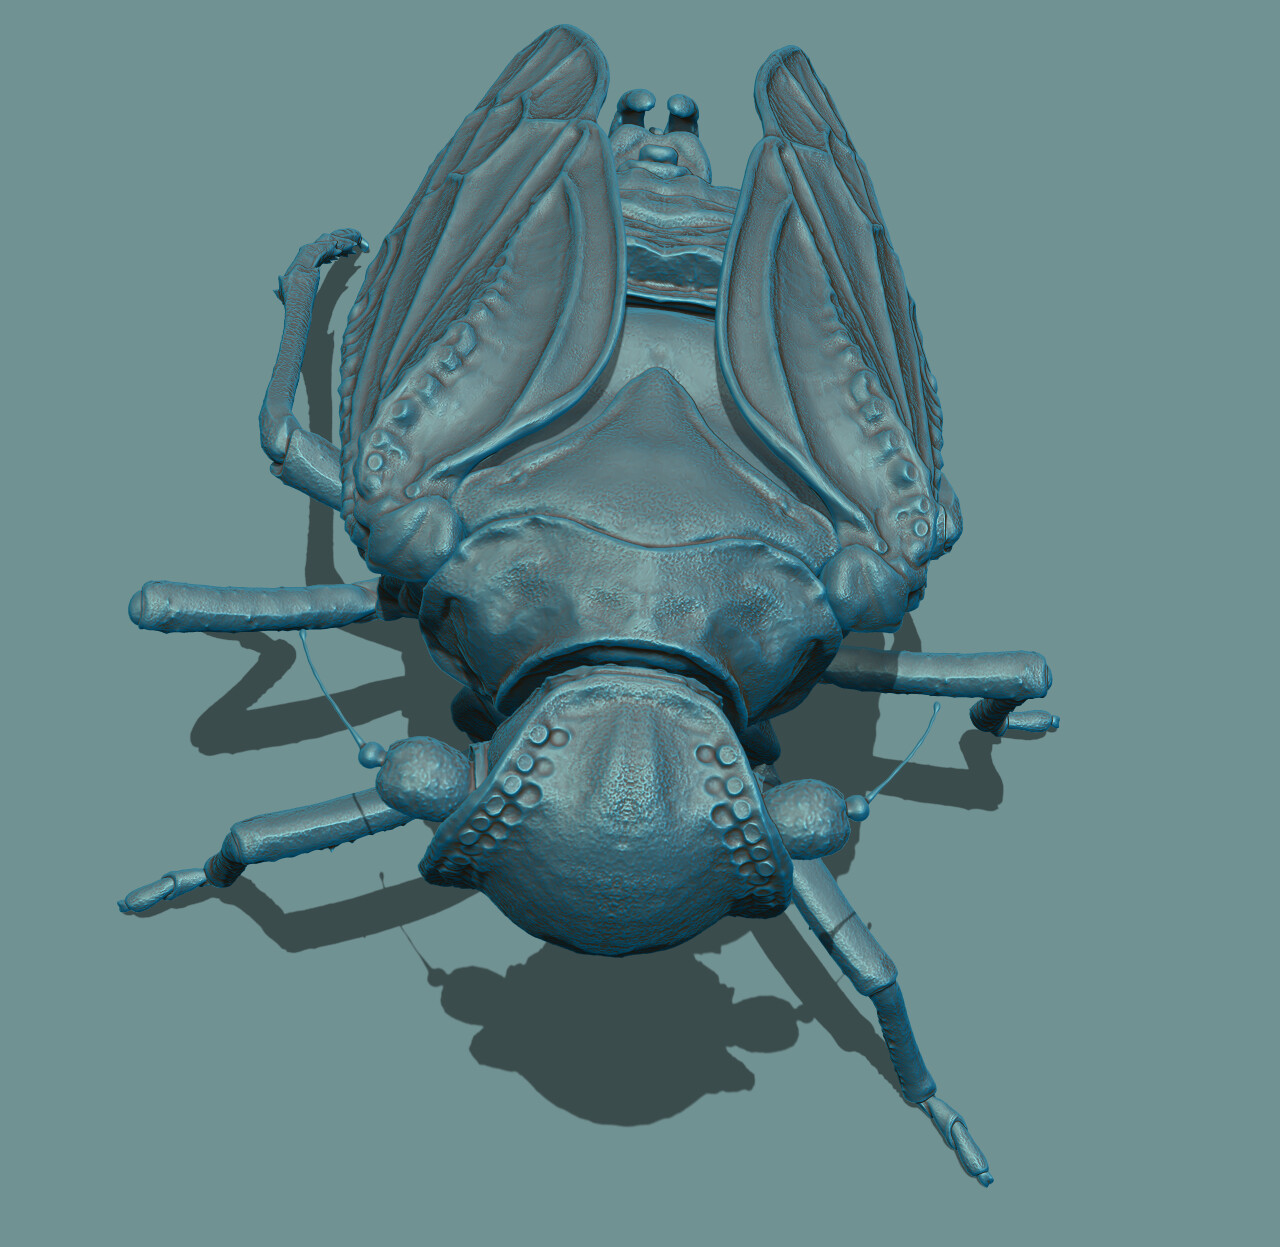 Meenopliid bug rendered in ZBrush